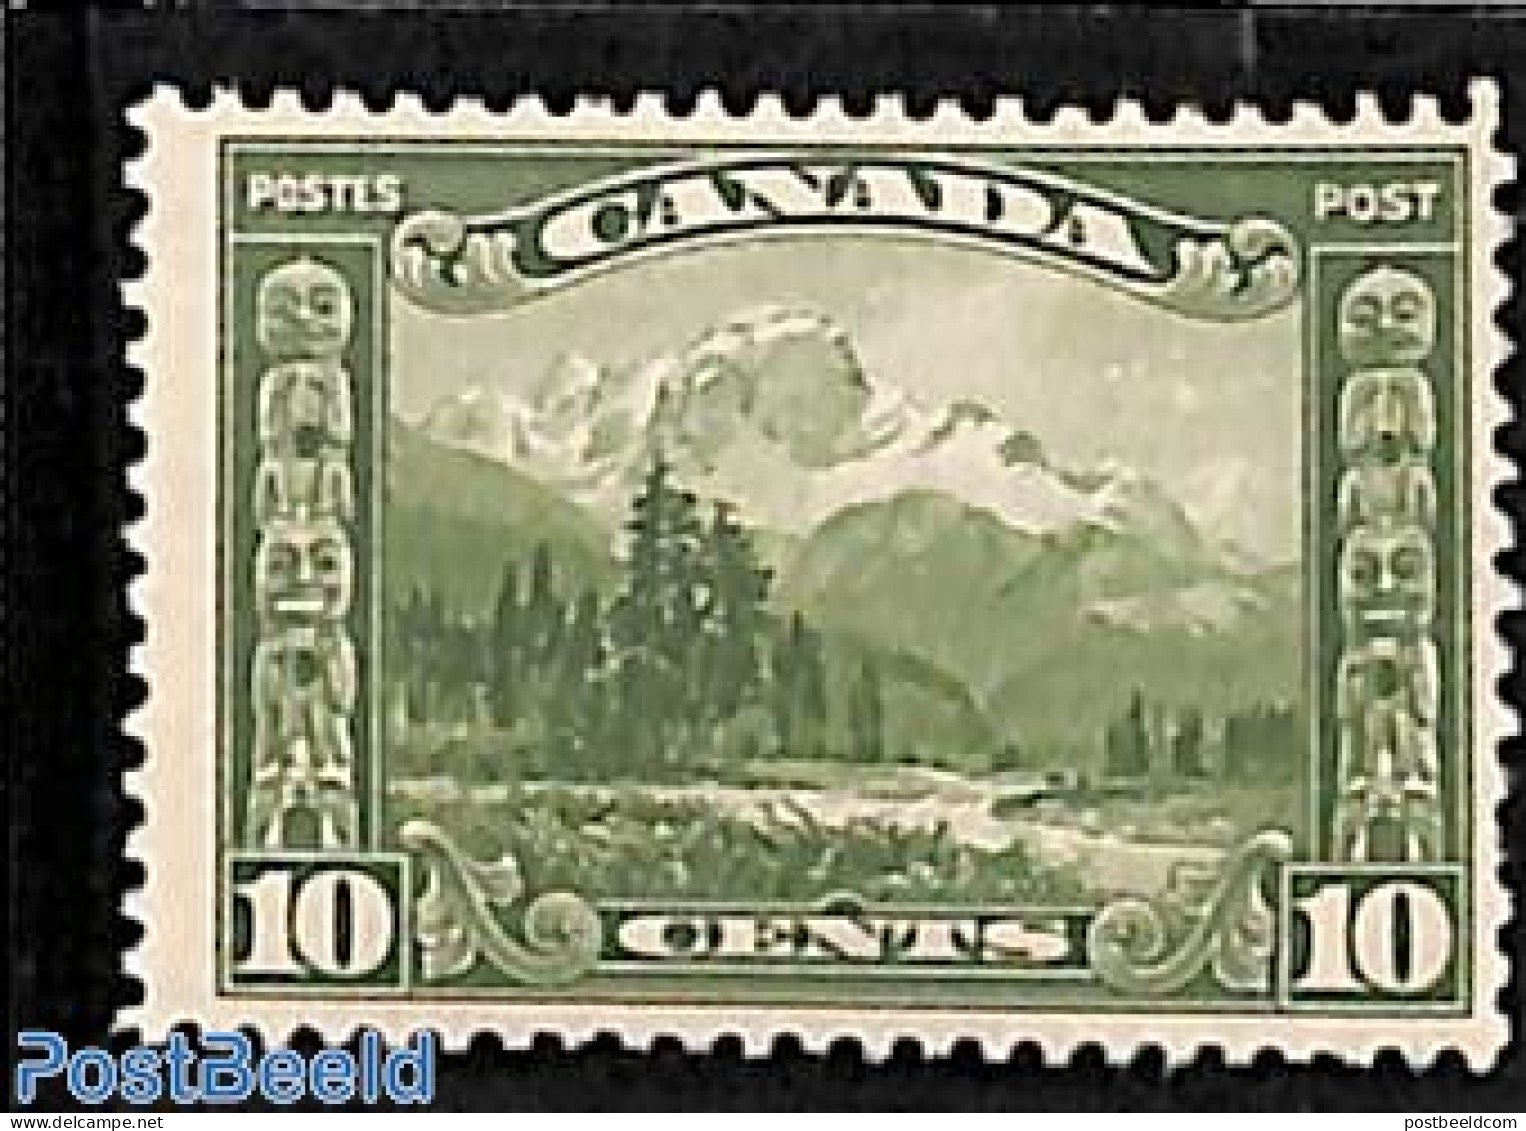 Canada 1928 10c, Stamp Out Of Set, Unused (hinged) - Unused Stamps